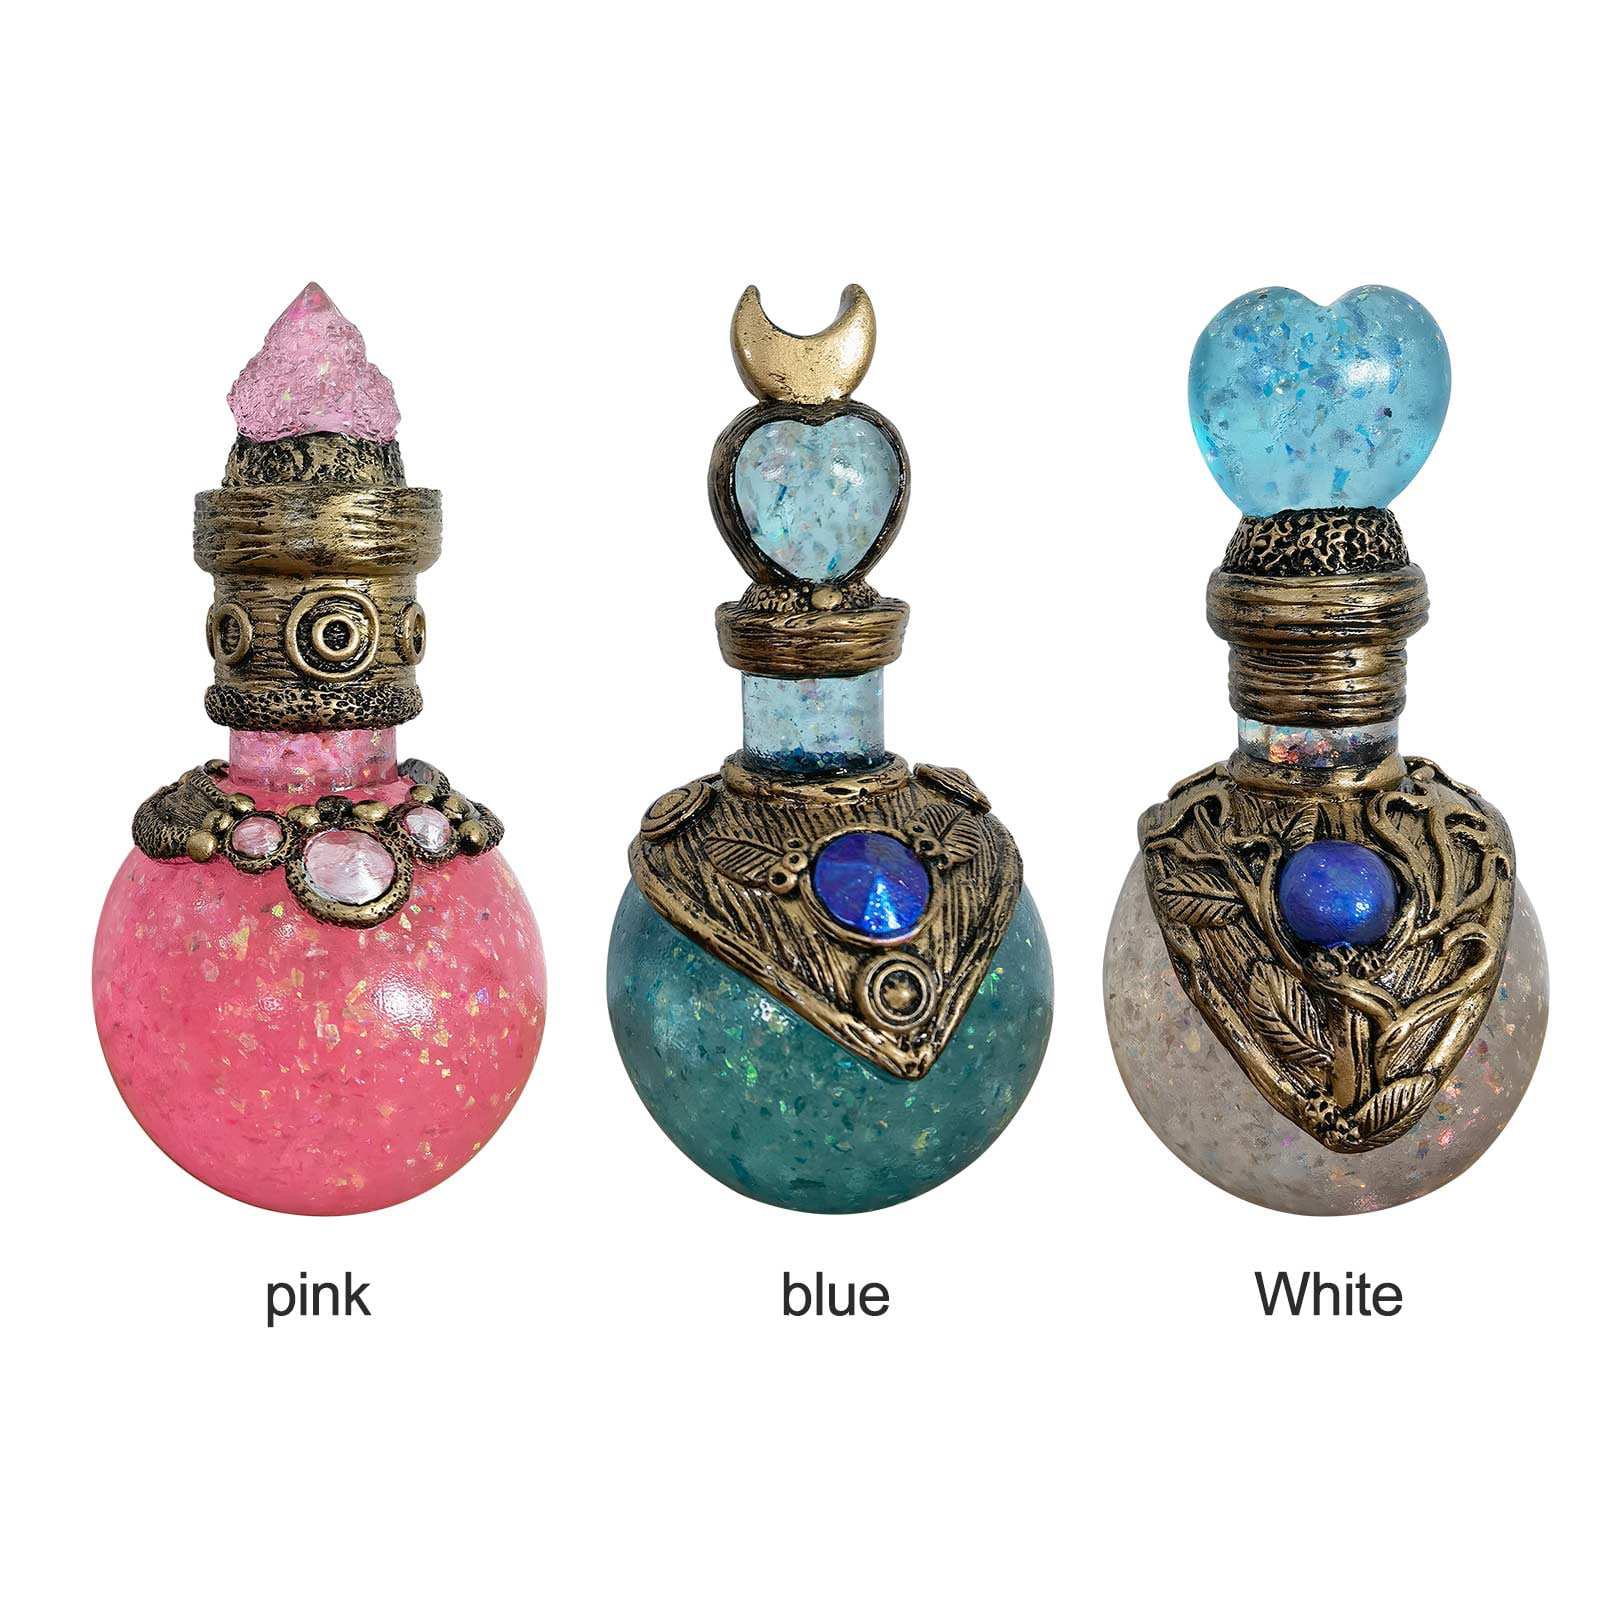 general3 Magic Potion Bottles for Witches Mermaid Aura Perfume Bottles  Quartz Crystals Jeweled Wishing Bottles Vintage Resin Decorative Bottles  Gifts